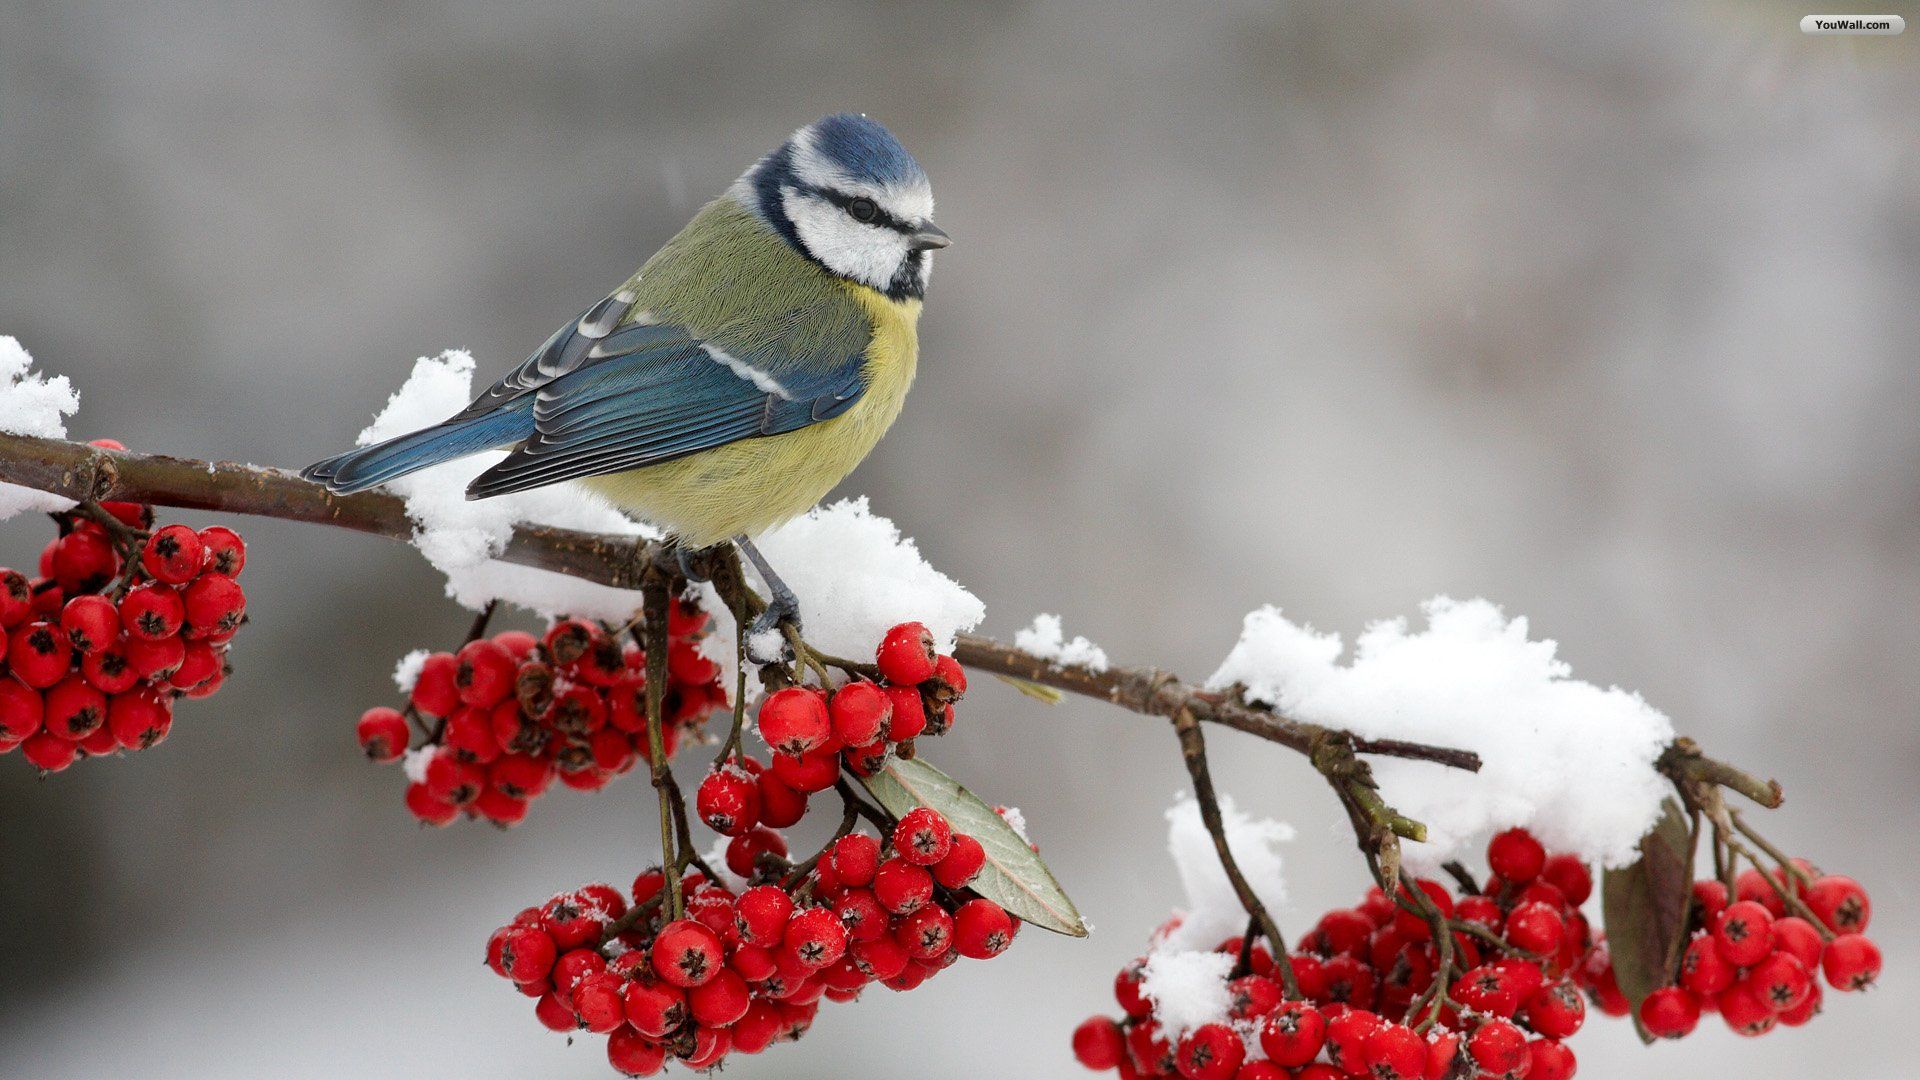 Photos of Winter birds to share on facebook | Ventube.com Birds In ...